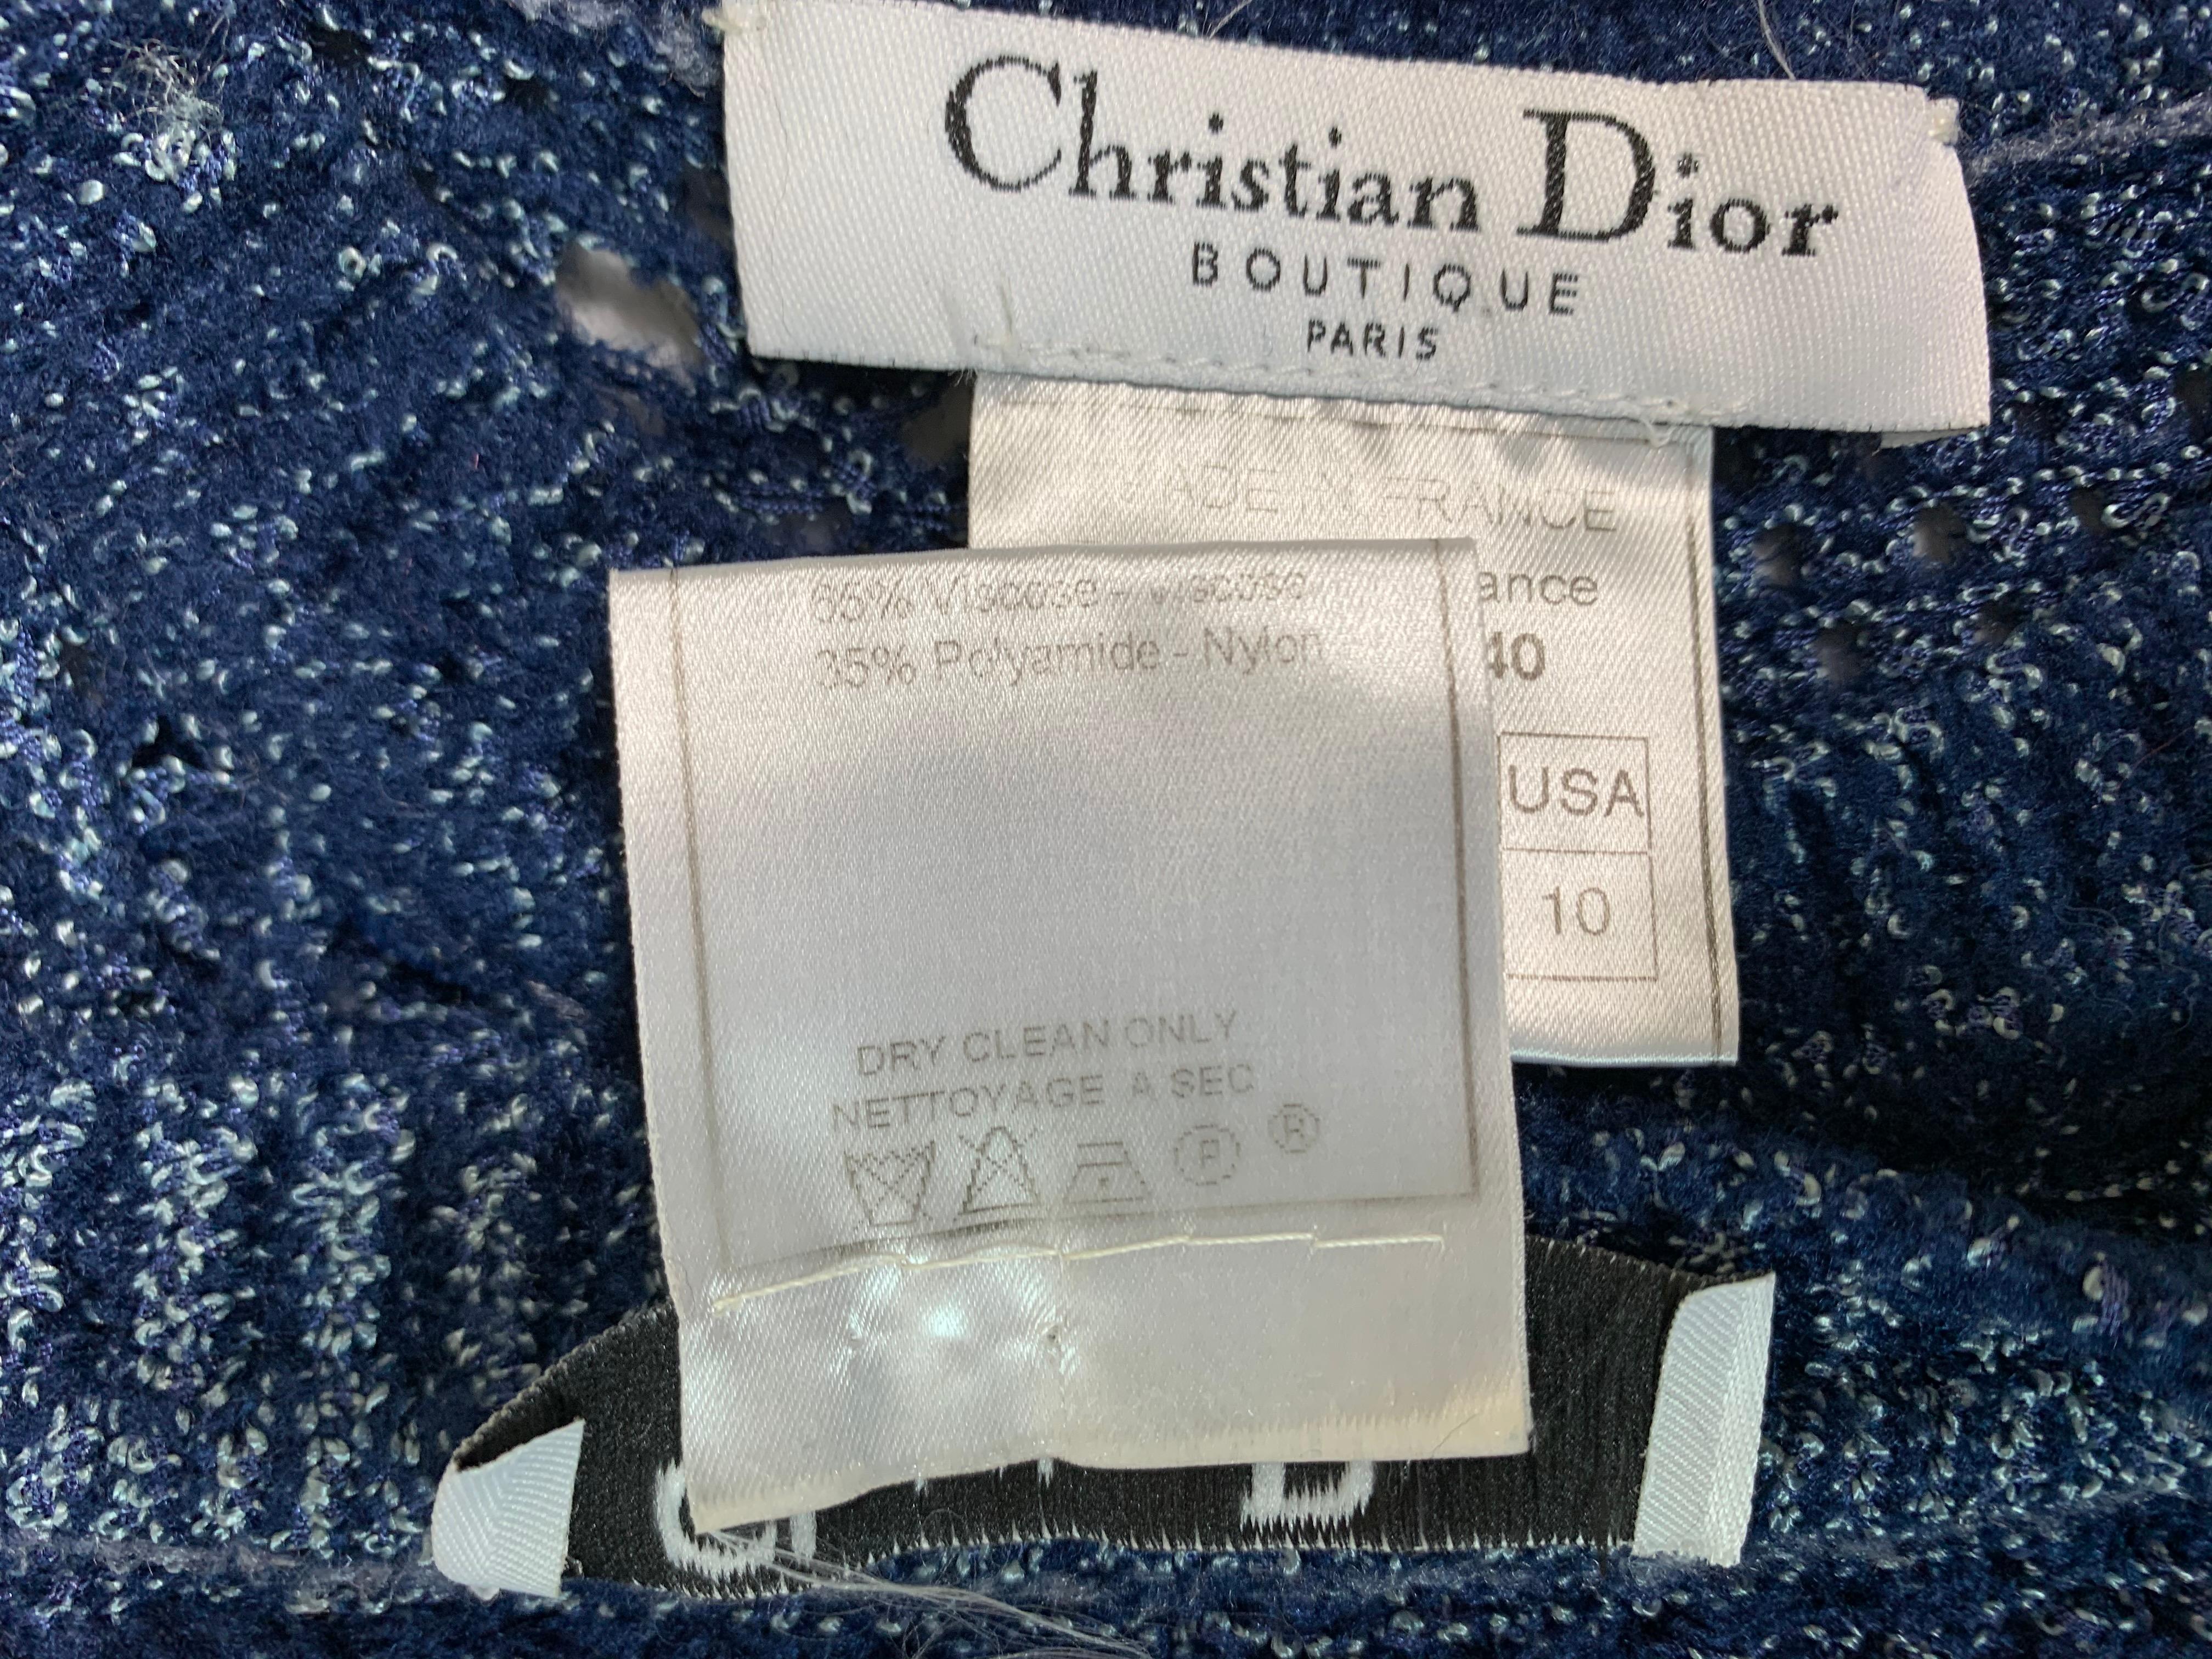 S/S 2000 Christian Dior John Galliano Runway Sheer Blue Knit Dress & Jacket 2